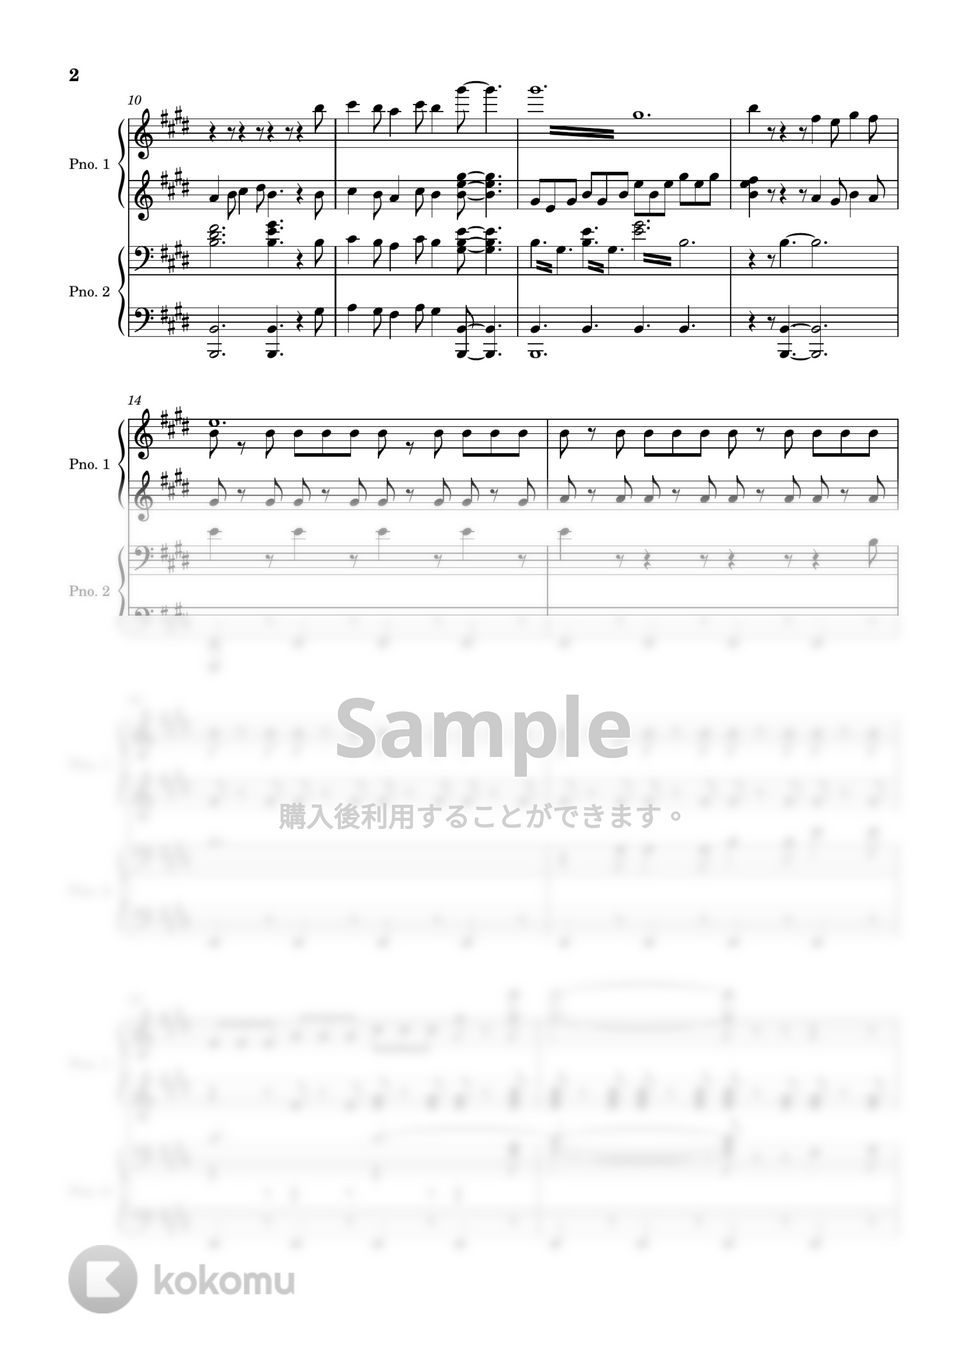 BARR JONATHAN IAN - ポルト・パラディーゾ (ピアノ連弾) by やすpiano